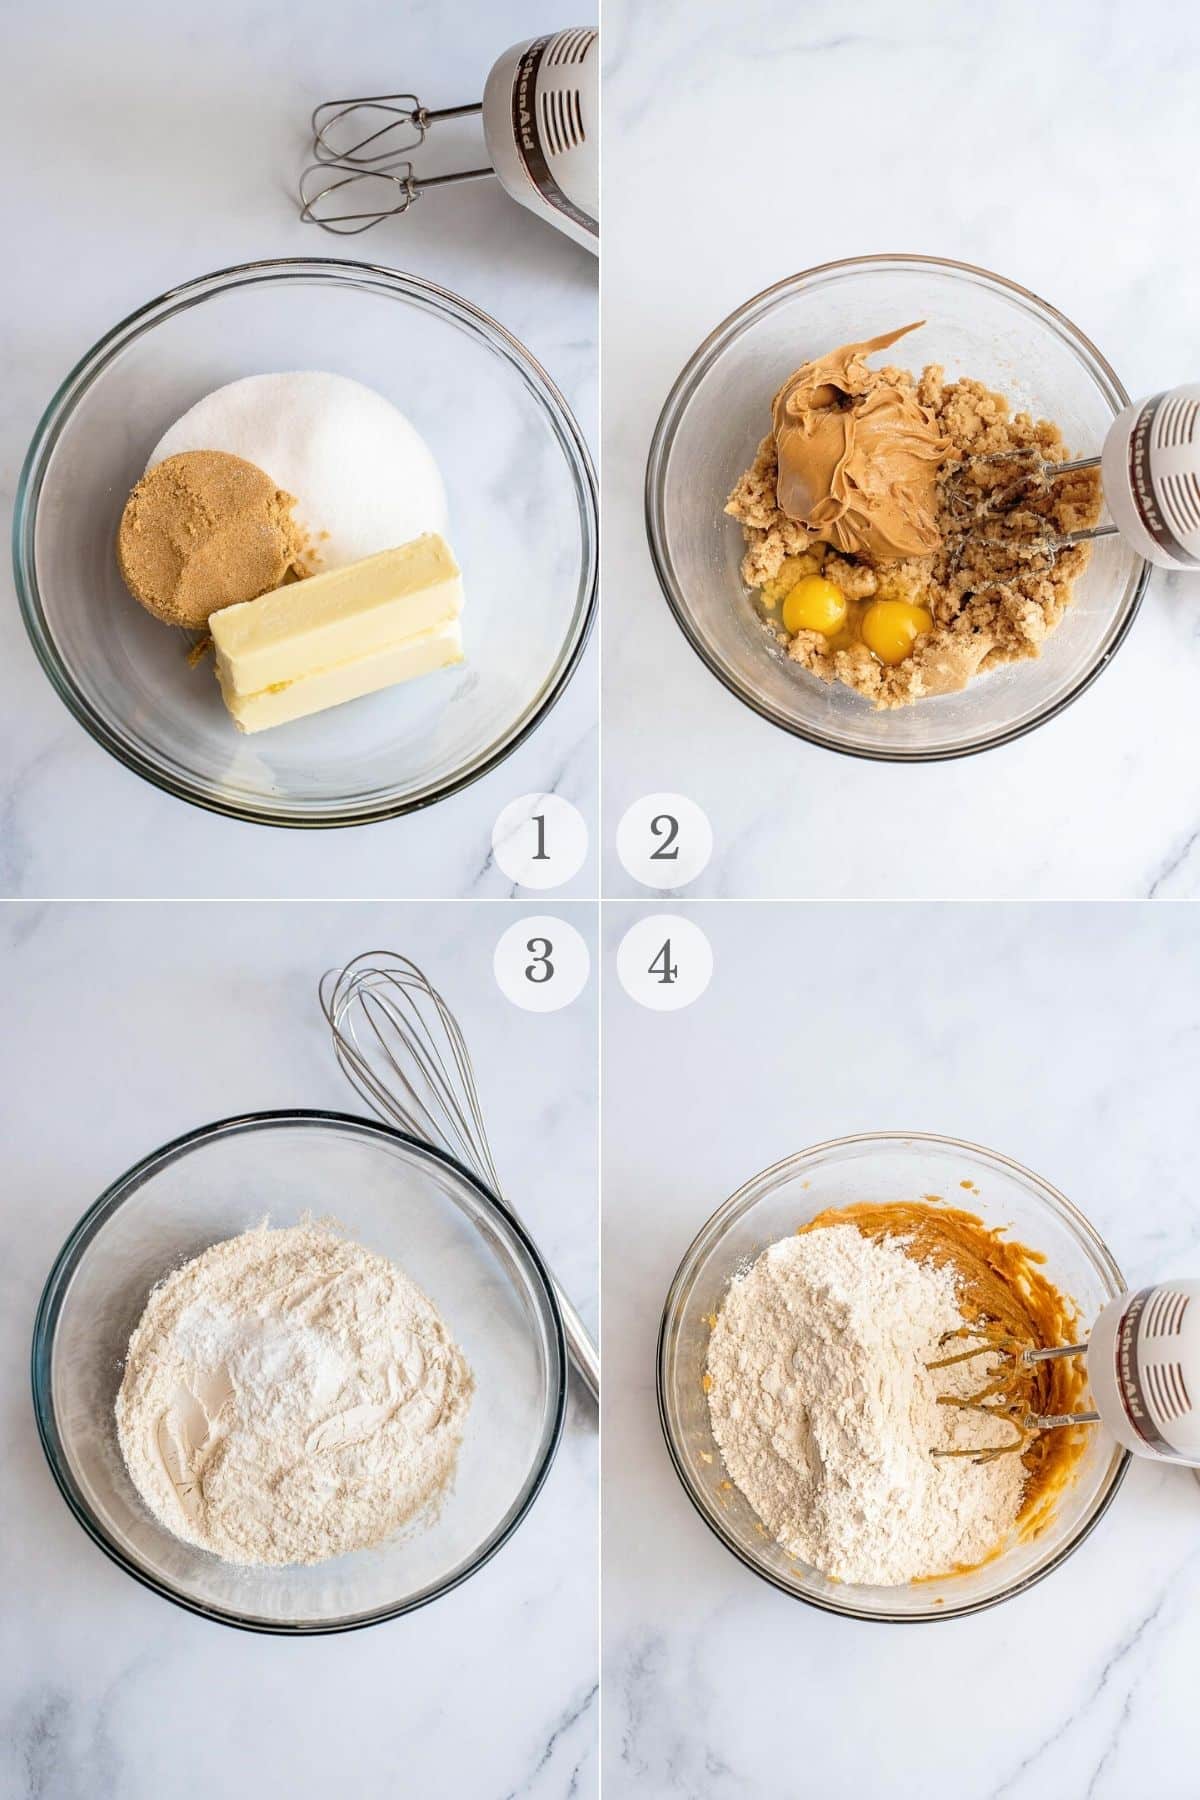 peanut butter cookies recipe steps 1-4